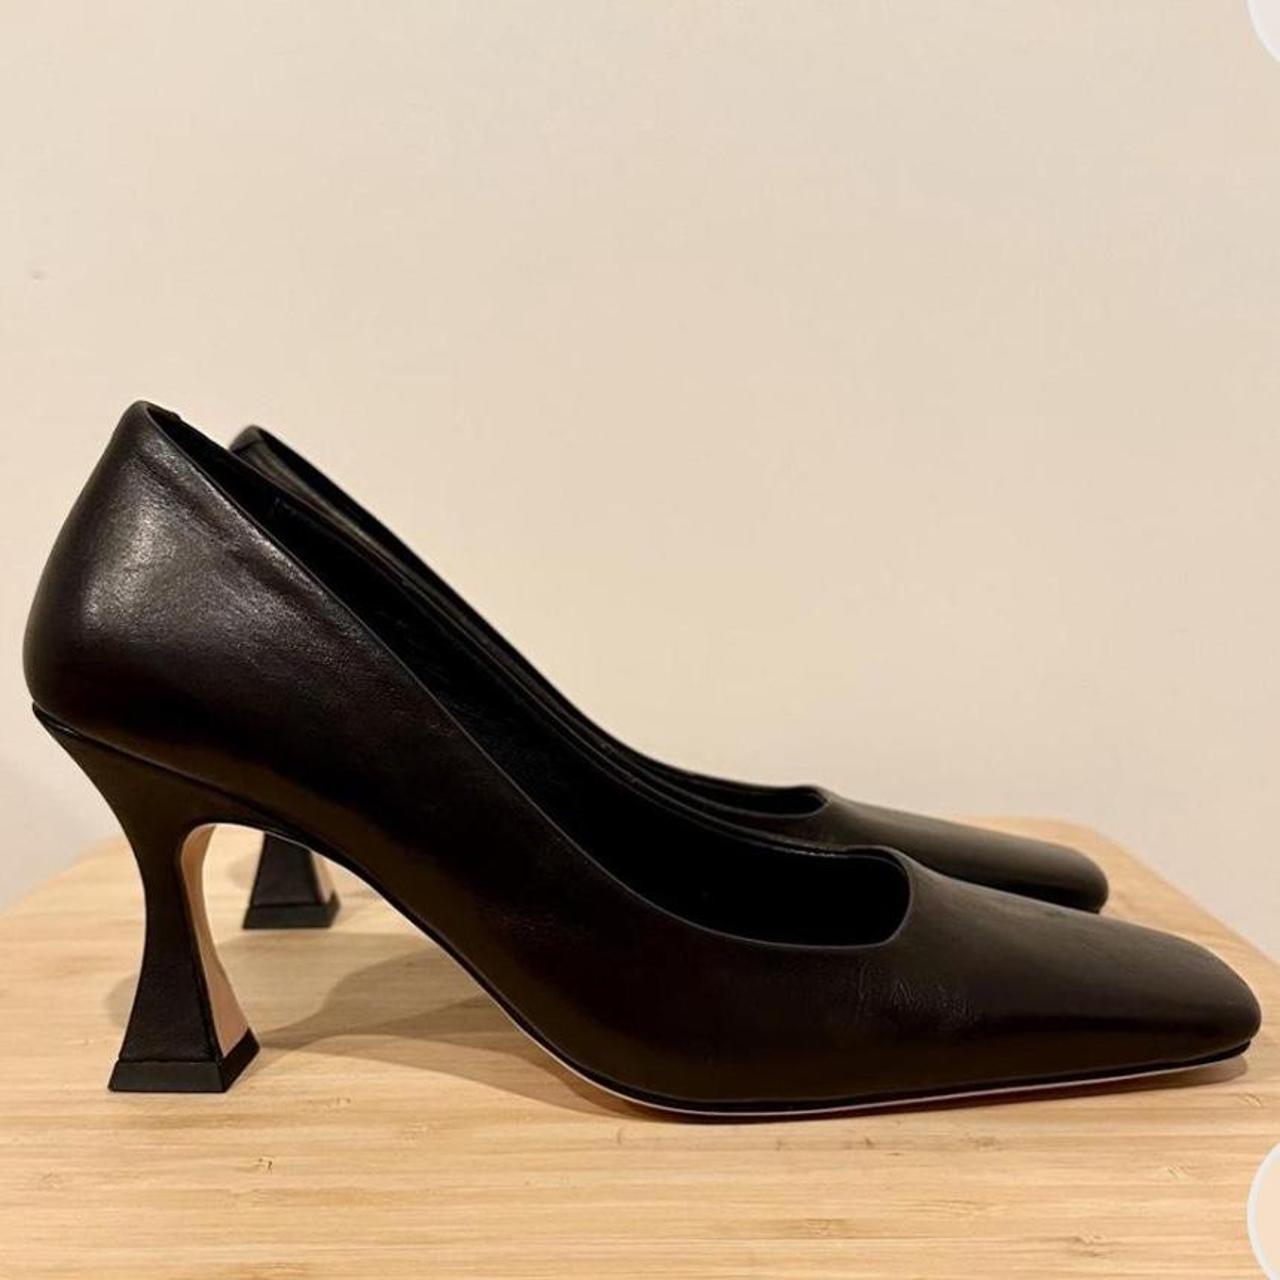 Vintage Tony bianco heels - Never work before AU size 6 - Depop